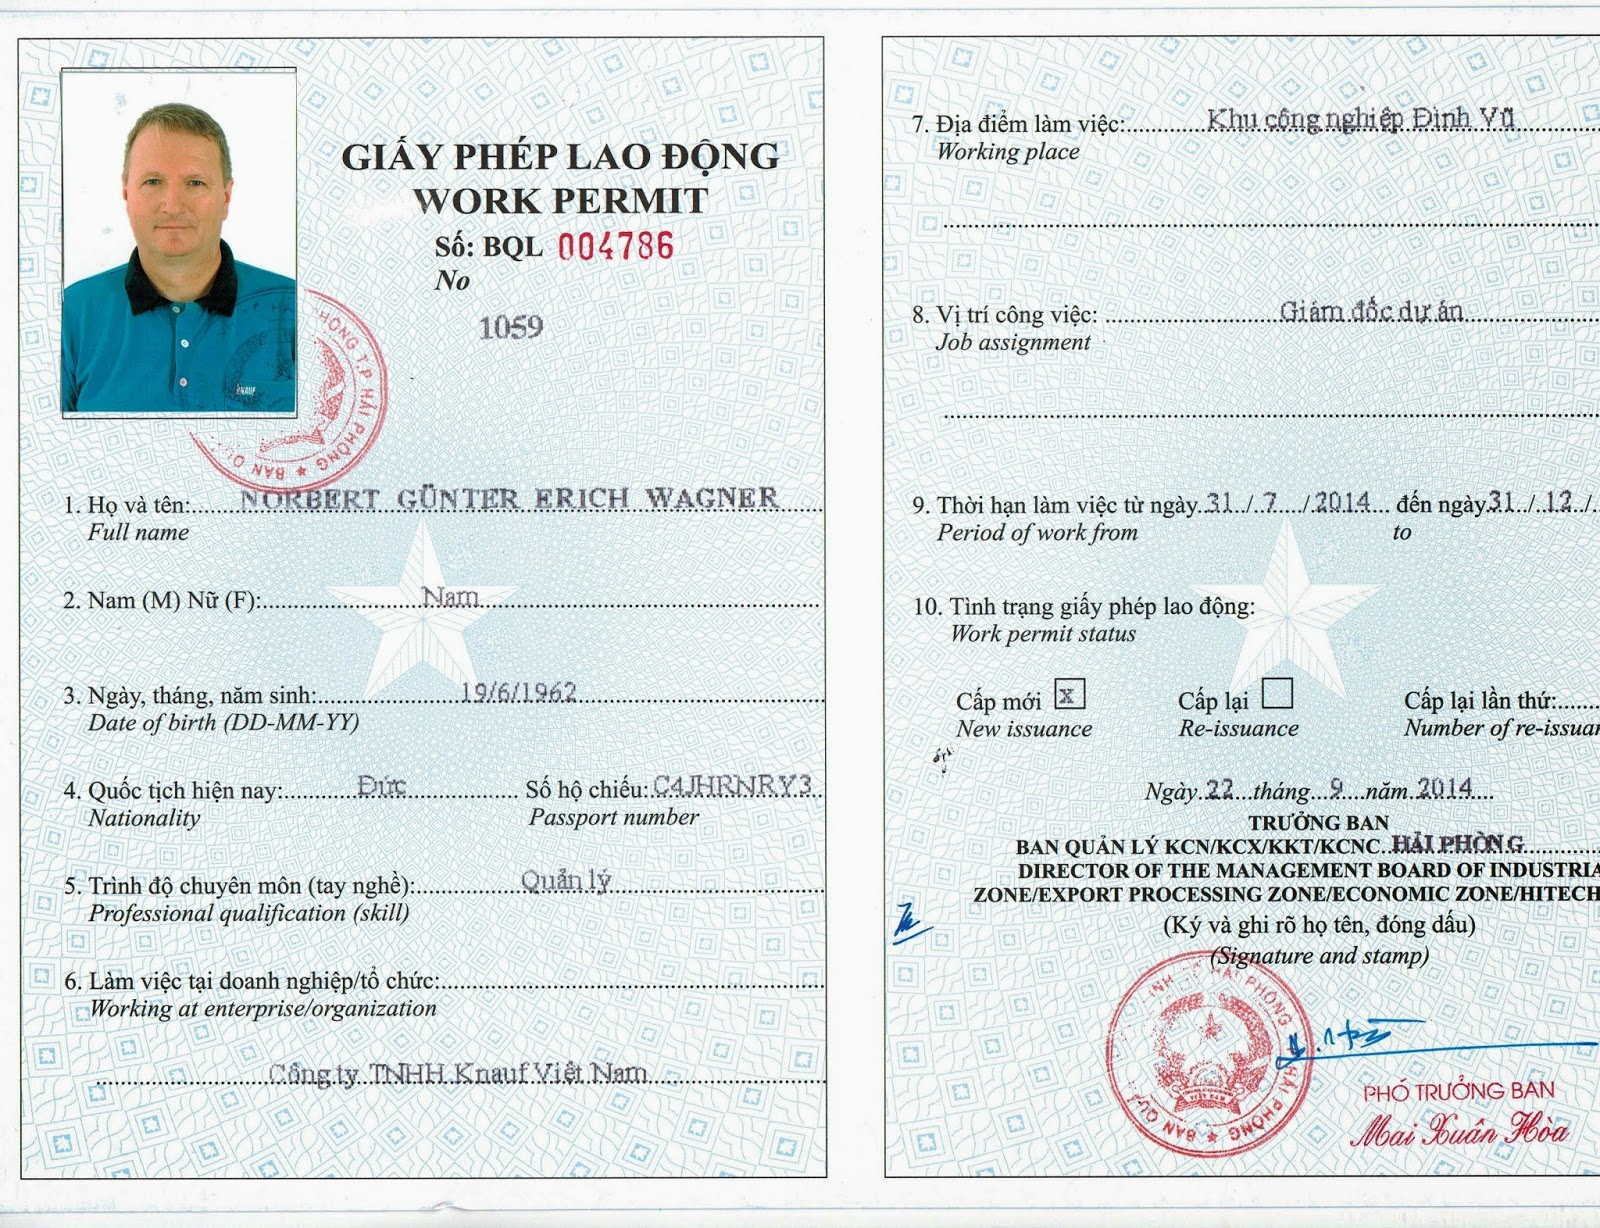 Work Permit là gì, Hot Work Permit là gì? Expat work permit là gì?